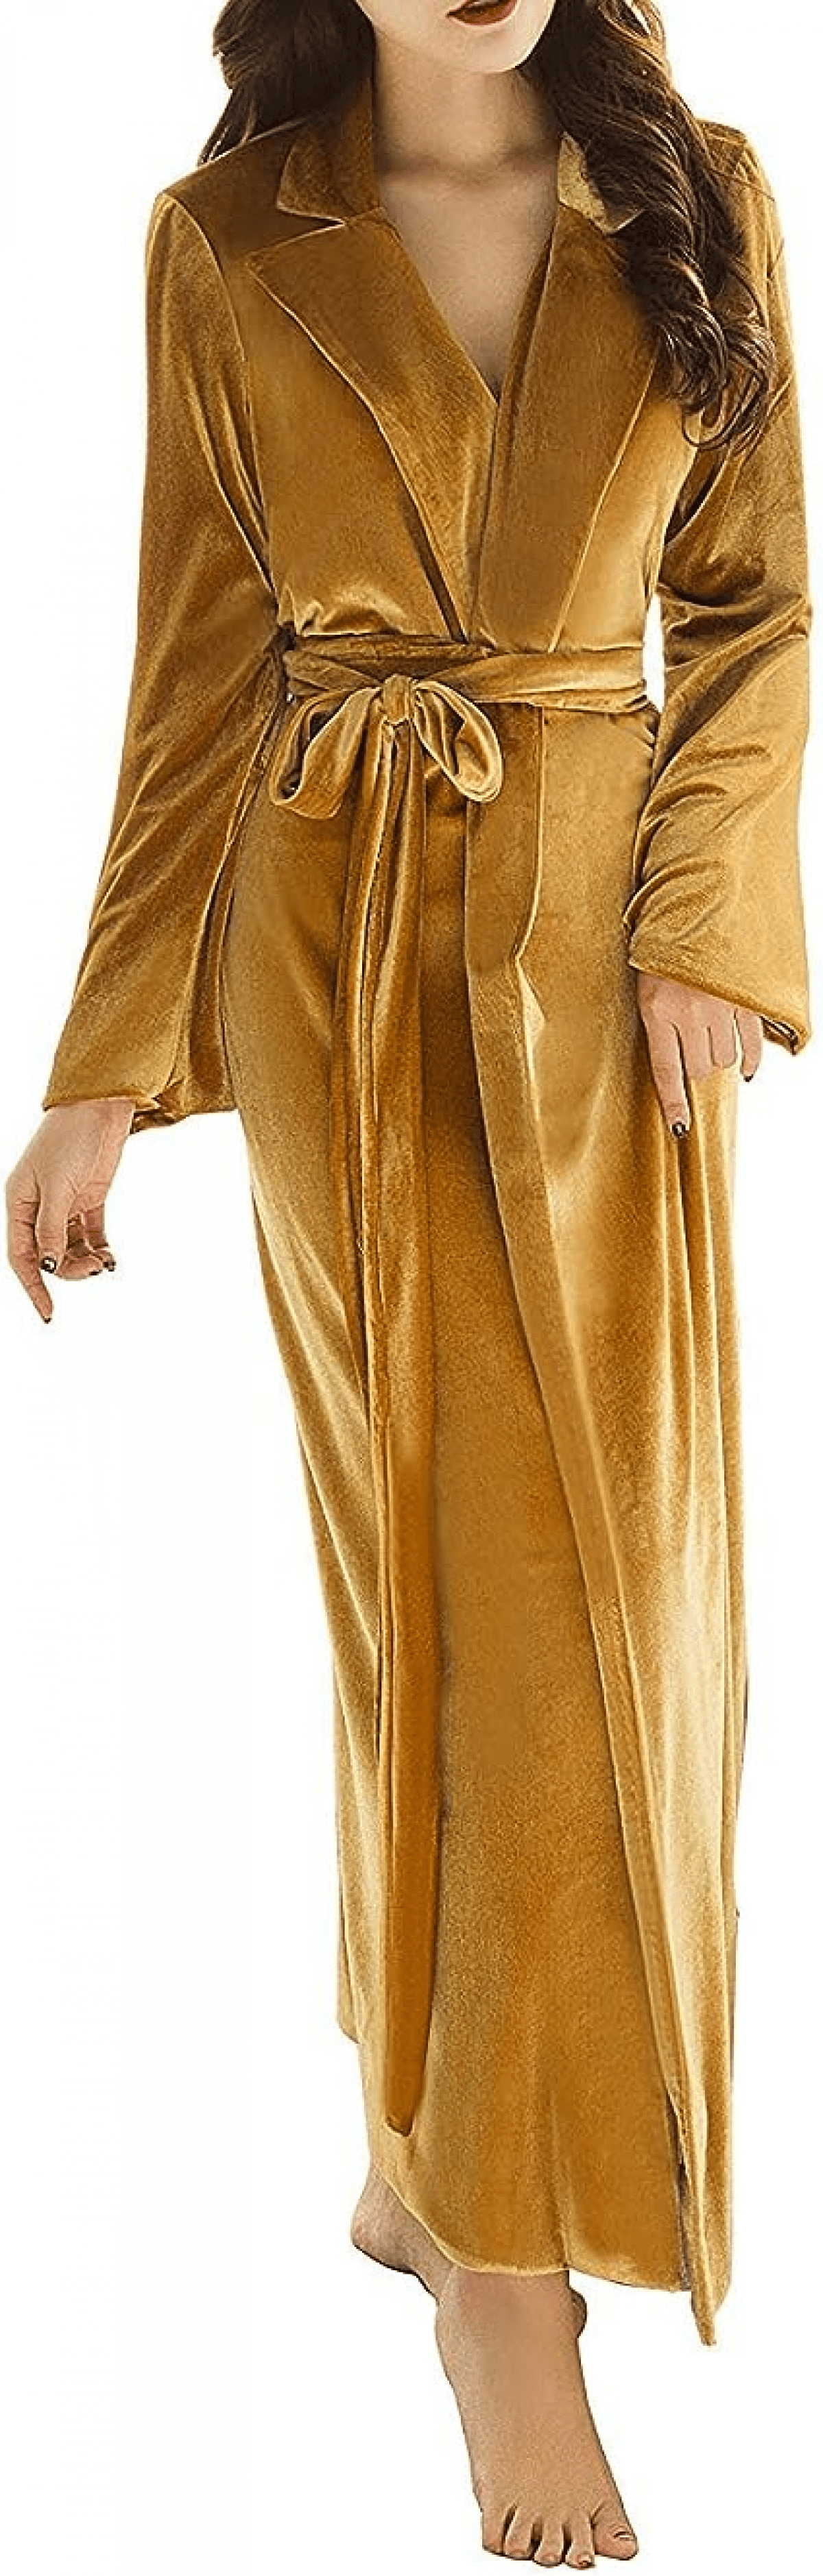 Gold Robe